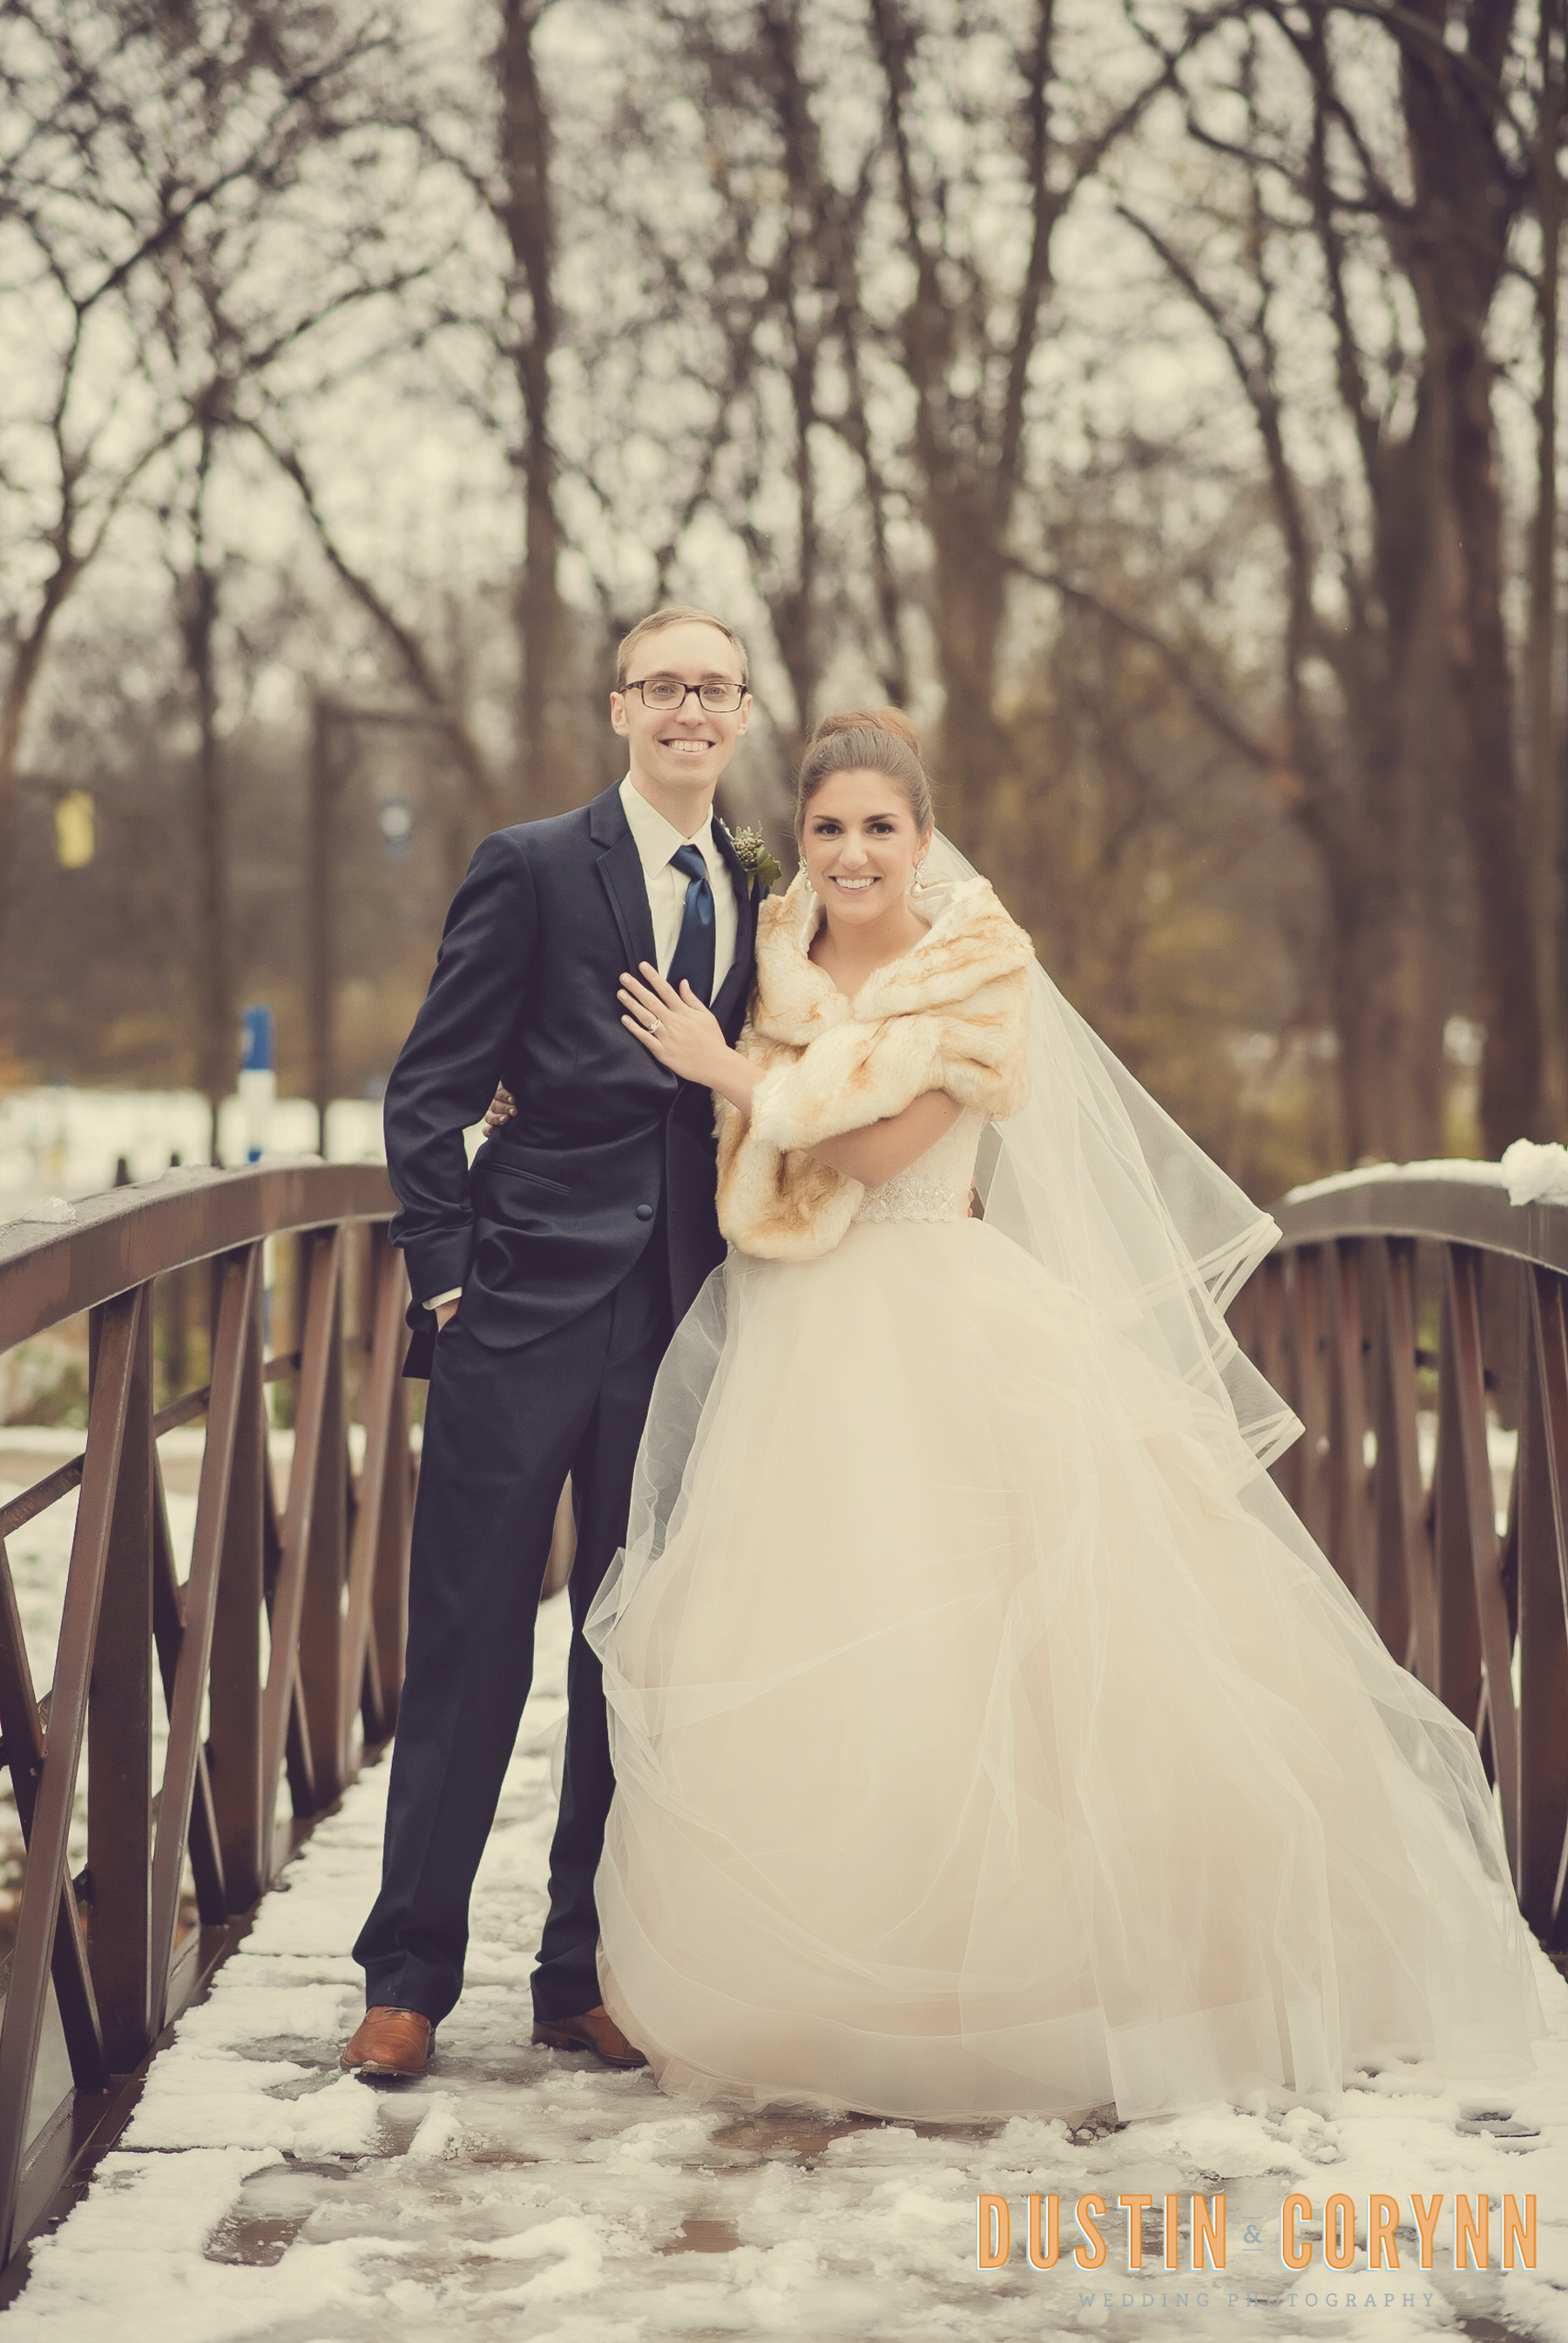 Indianapolis Wedding Photography - Dustin & Corynn Photography